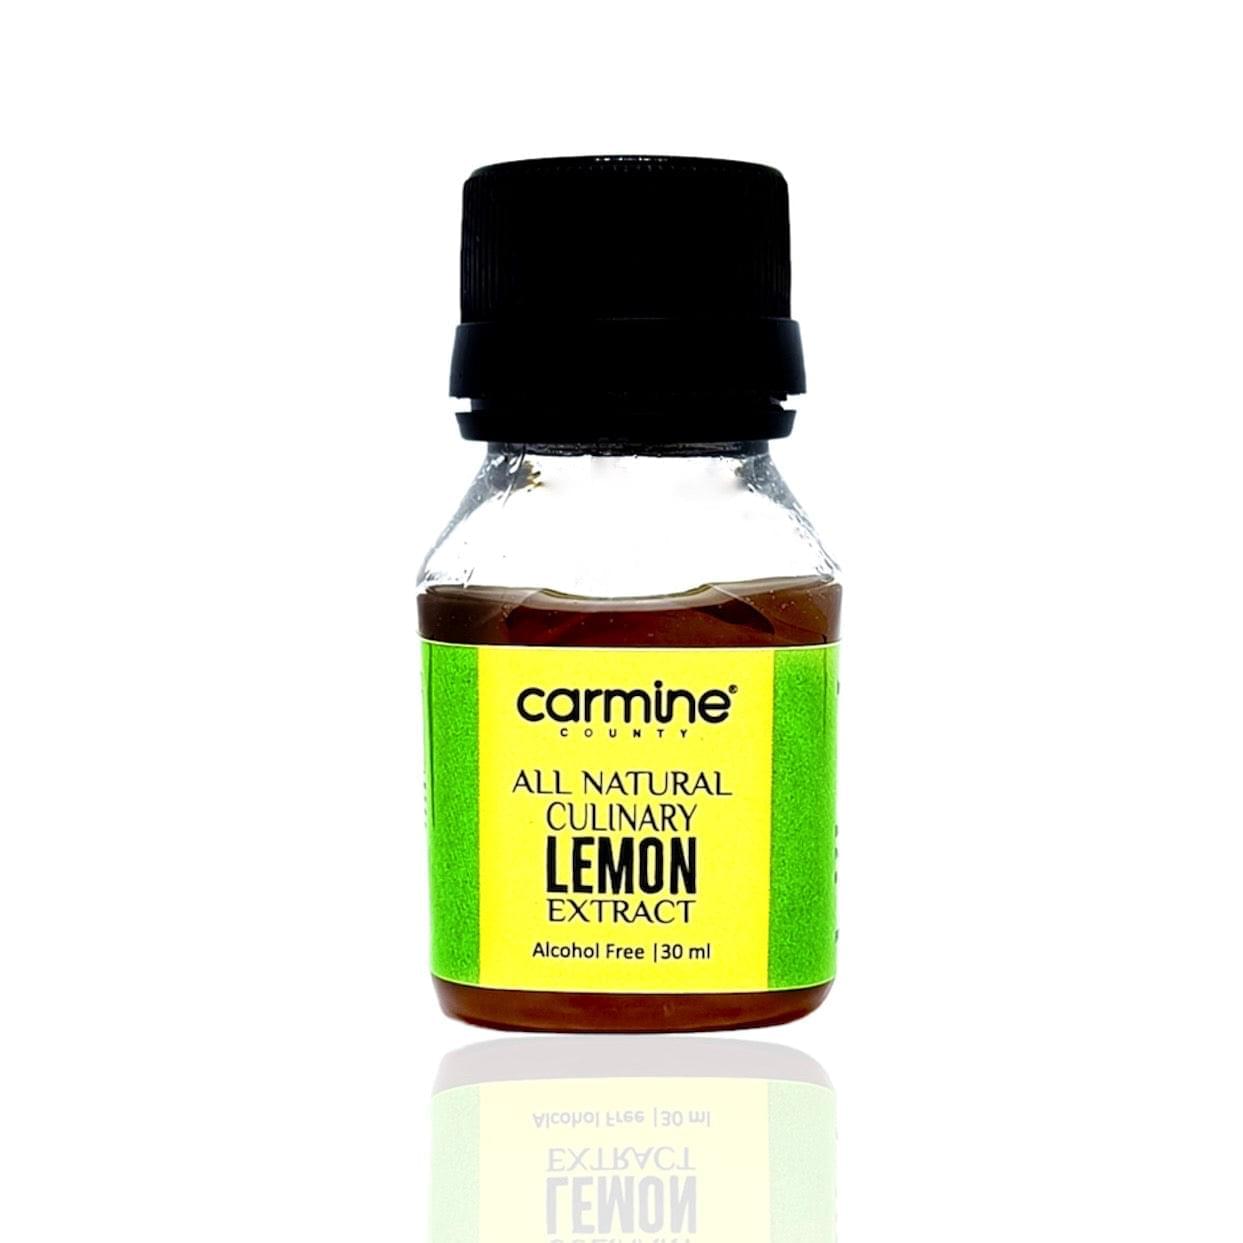 Carmine County All Natural Culinary Lemon Extract